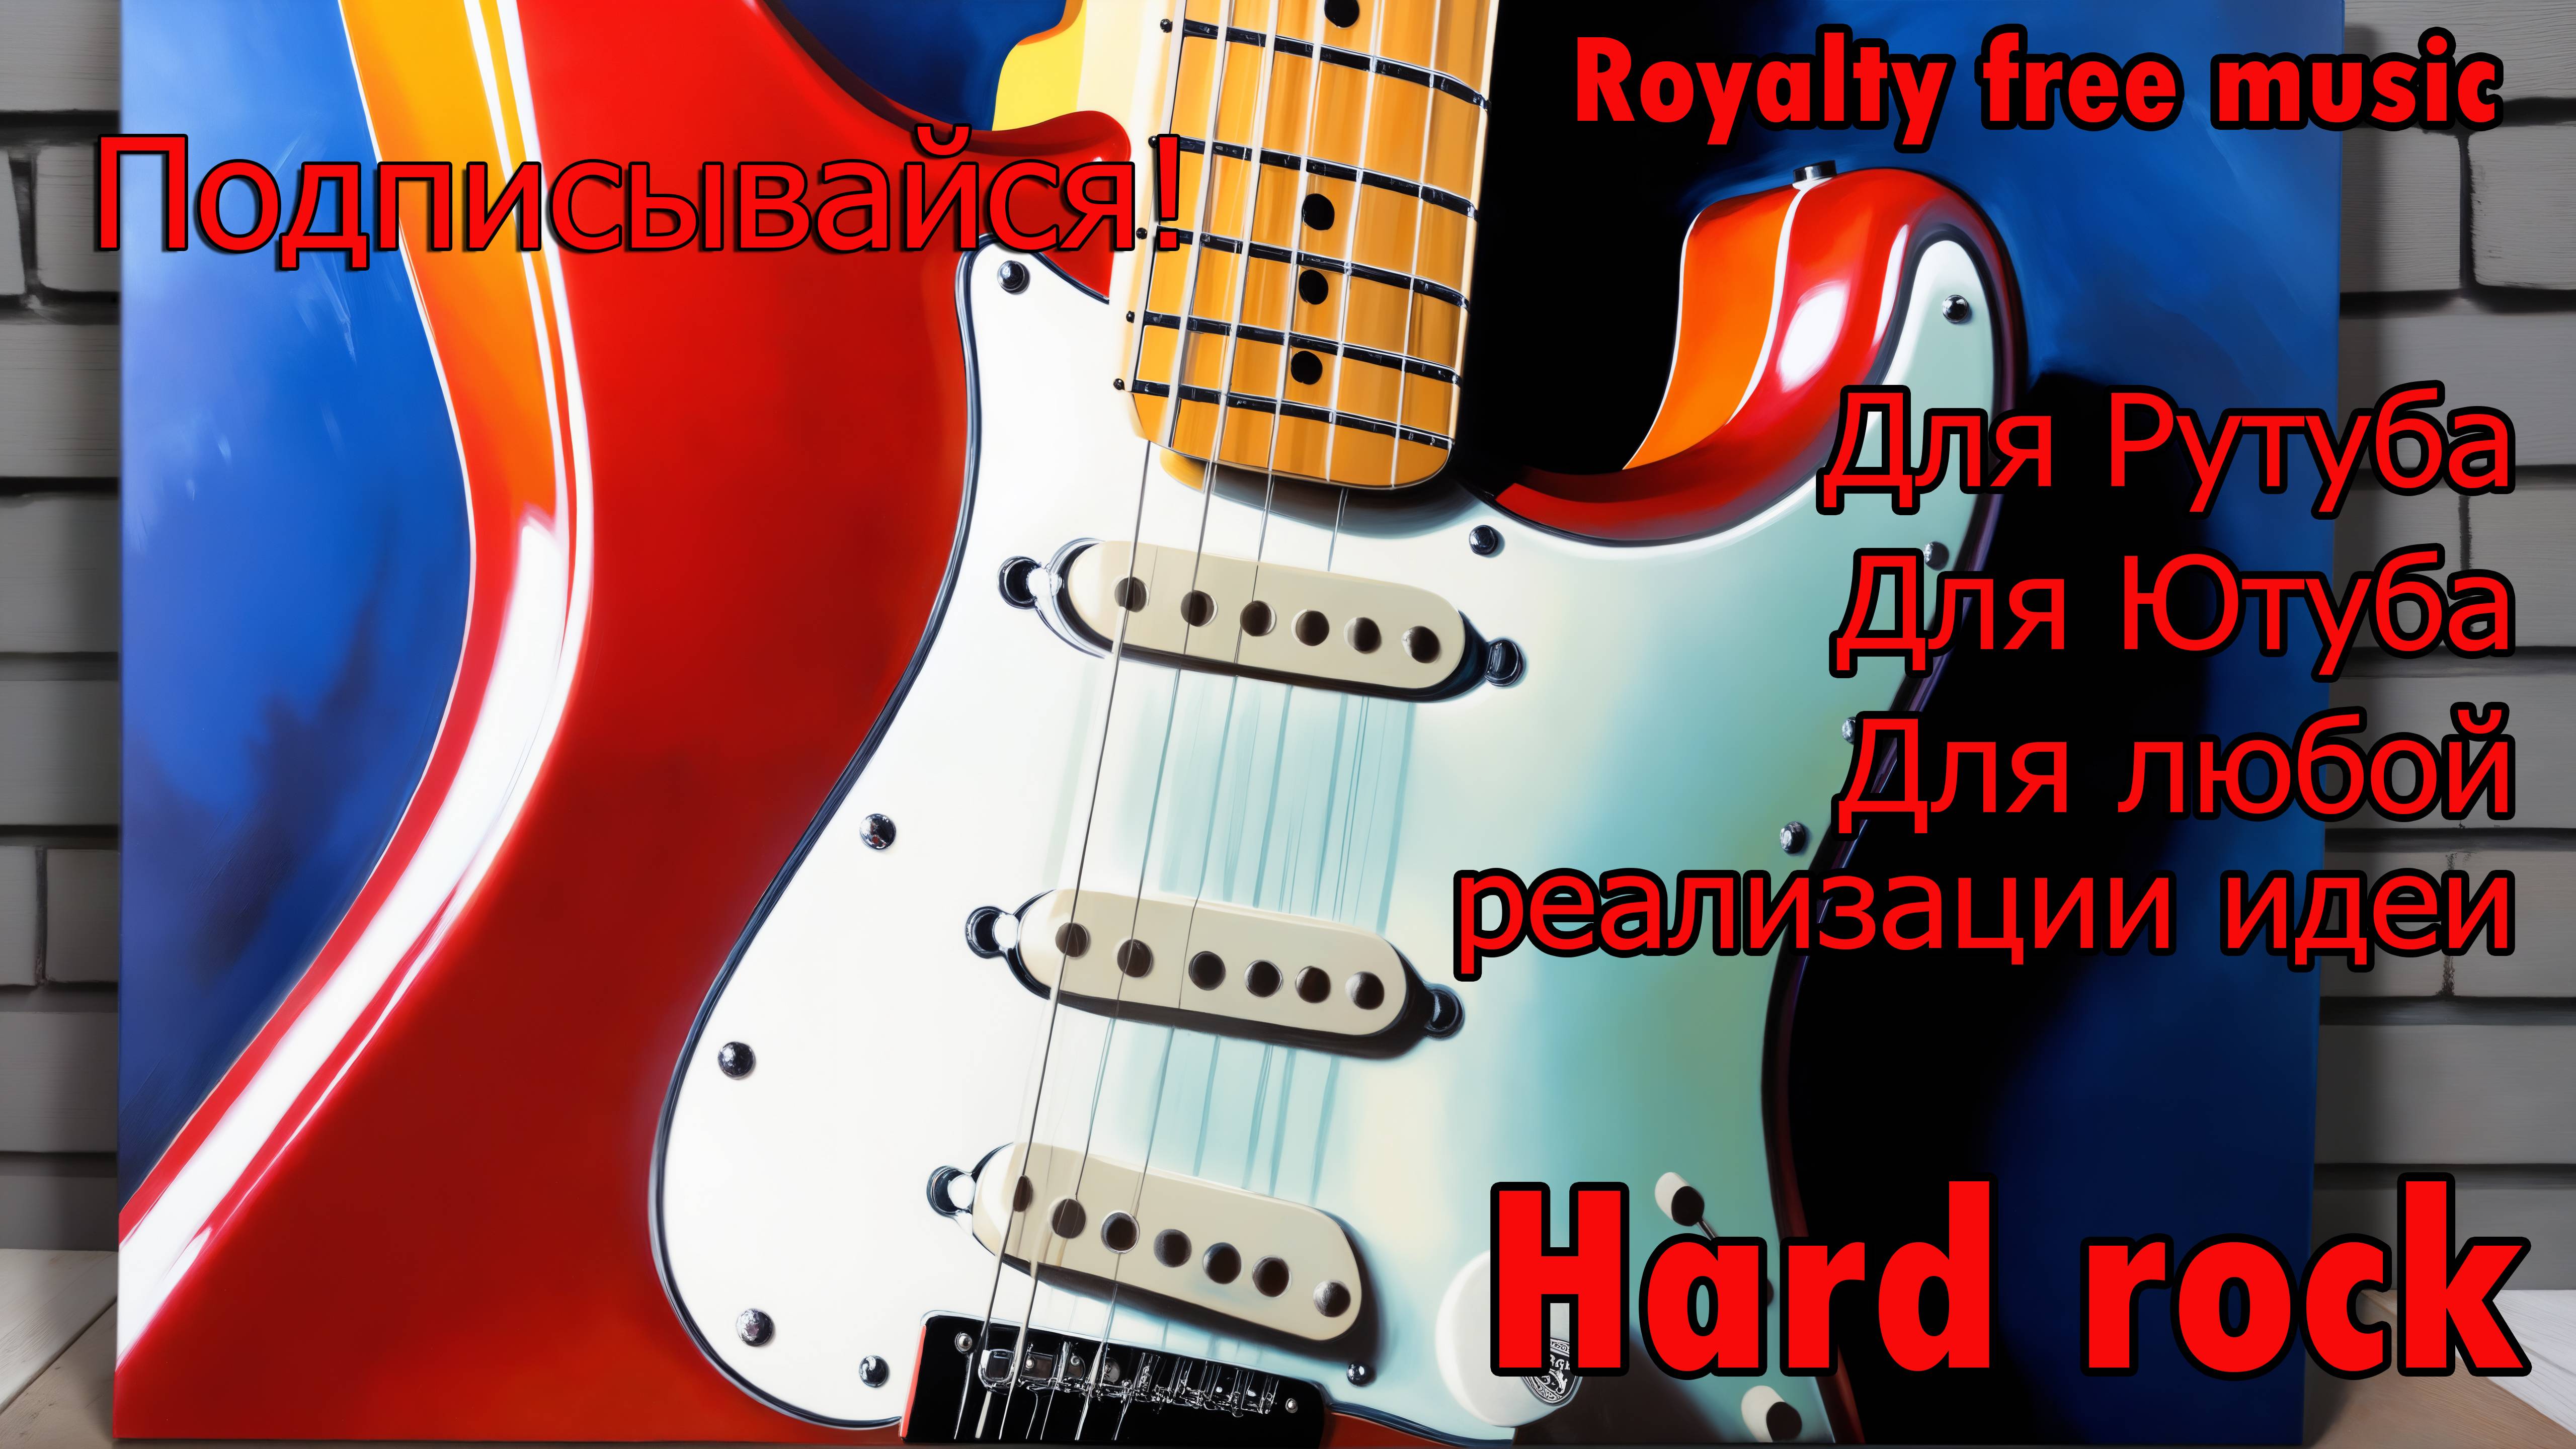 "Дорога ярости" - tr.1, Hard Rock, Royalty free, Бесплатная музыка, Музыка для Рутуб Ютуб